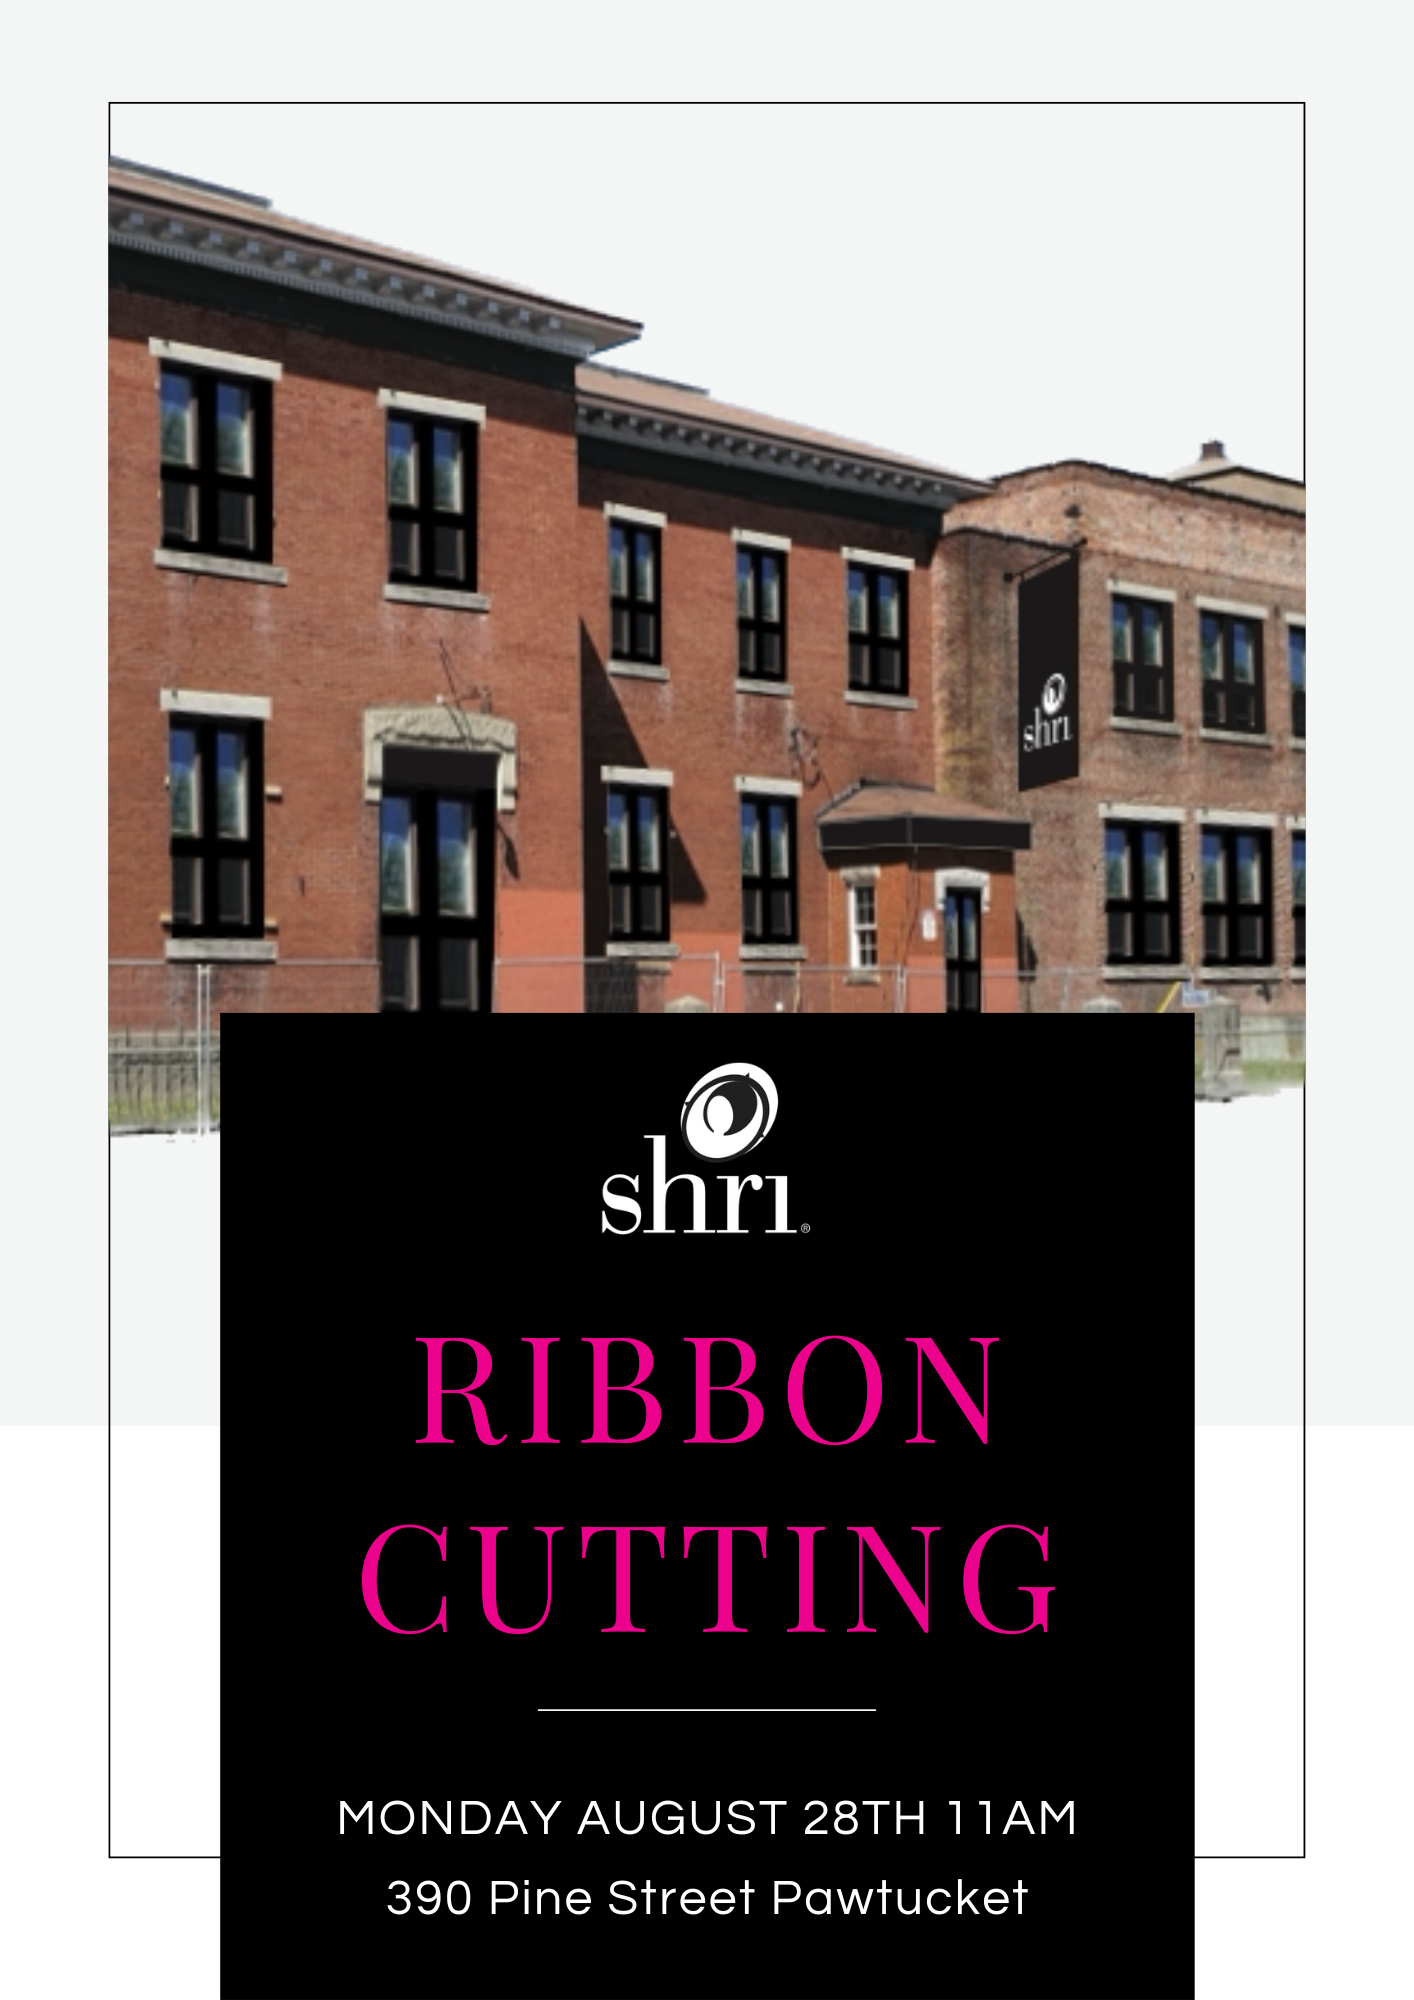 Shri Ribbon Cutting Flyer.png